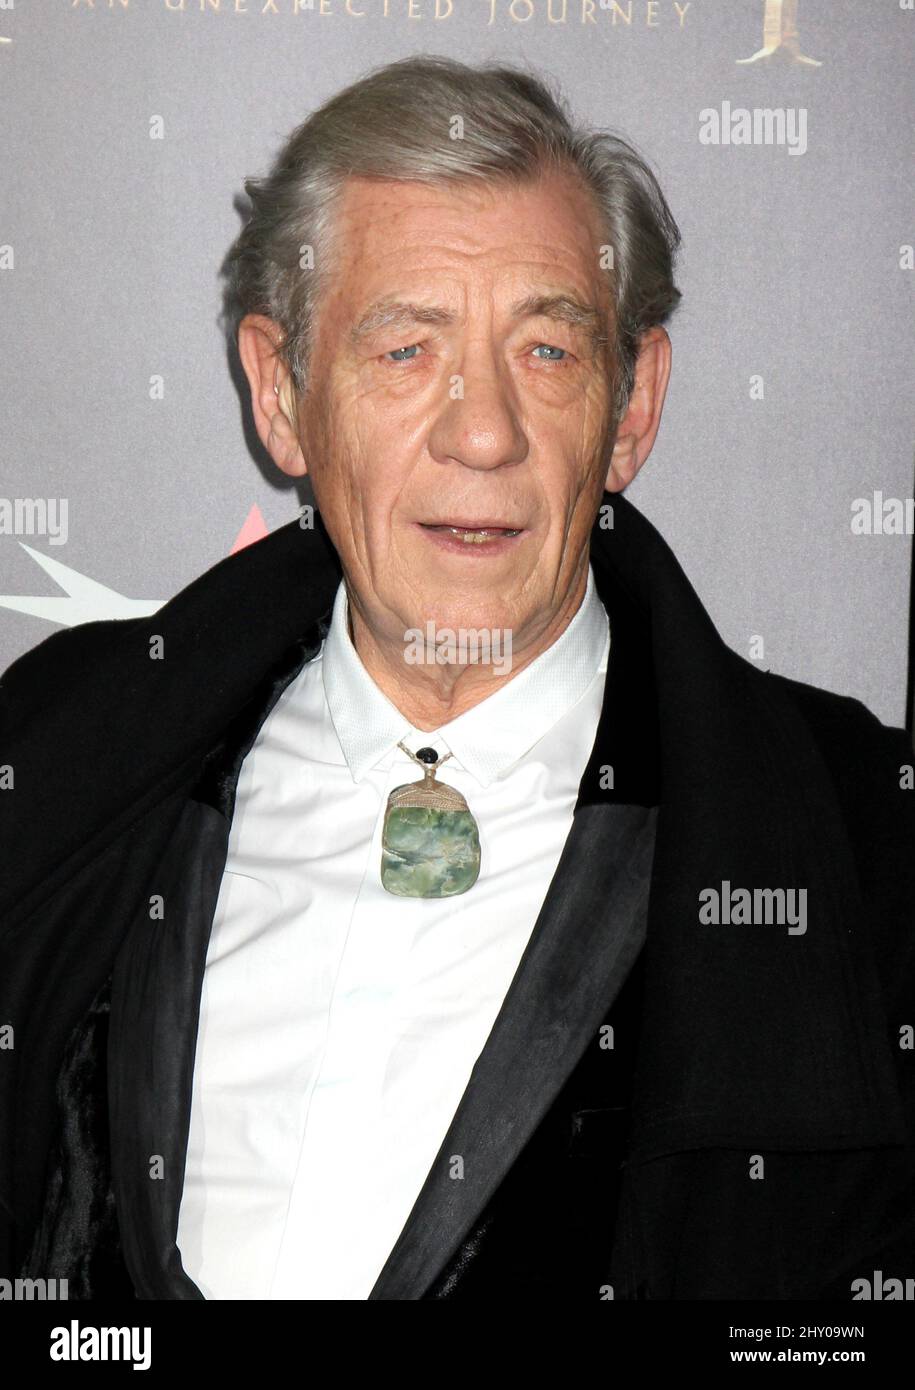 Ian McKellen attending 'The Hobbit: An Unexpected Journey' premiere held at The Ziegfeld Theatre in New York, USA. Stock Photo